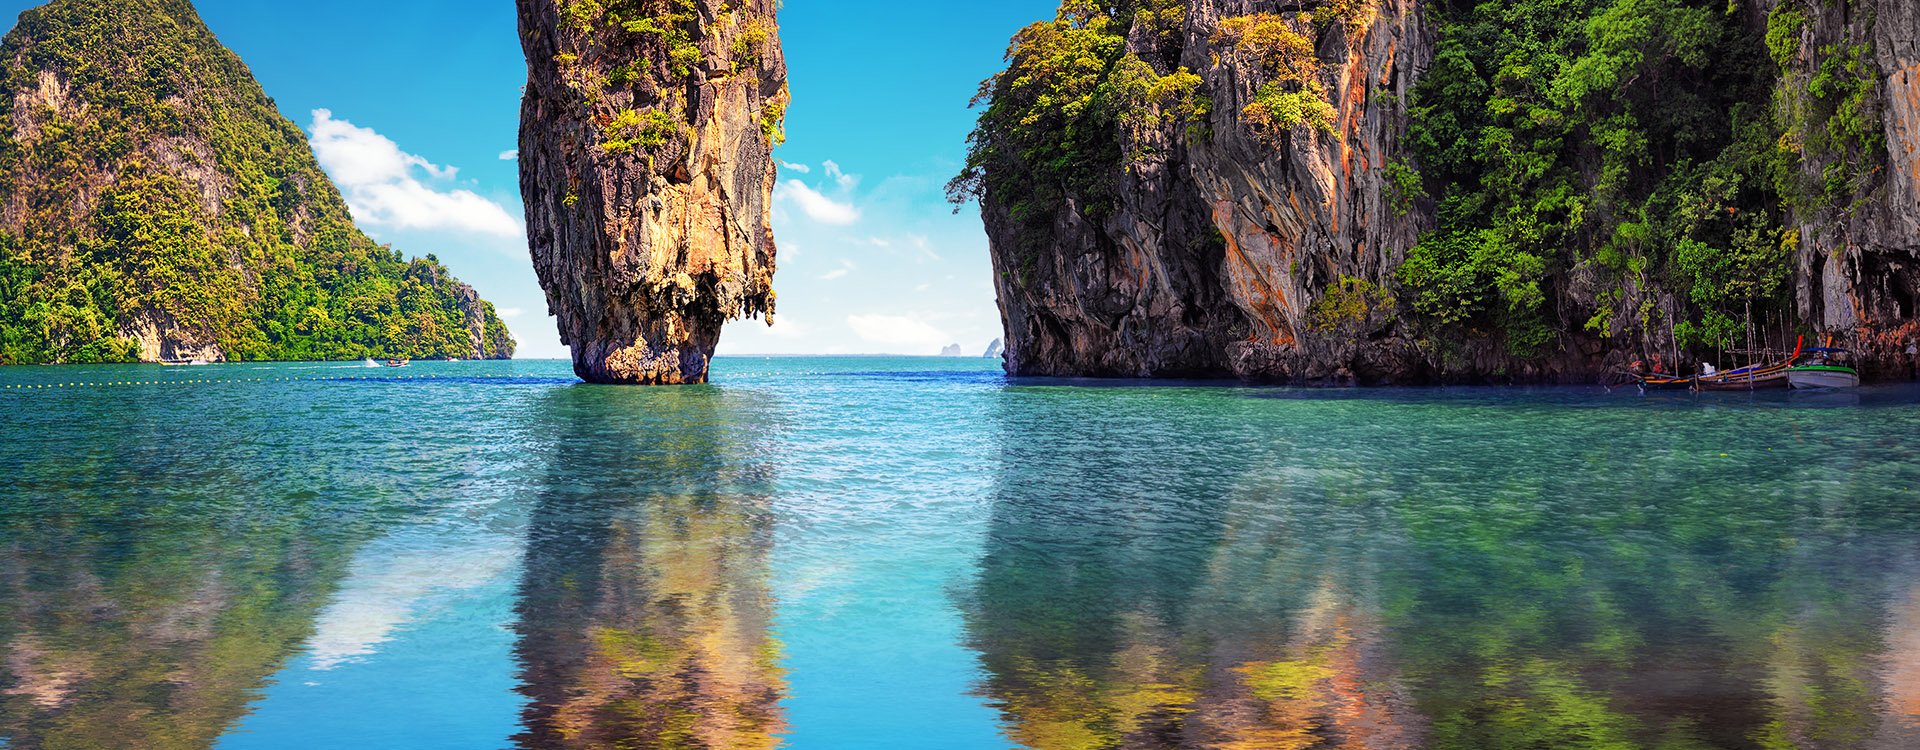 Phuket Thailand, James Bond Island Phang Nga Bay, luxury island getaways